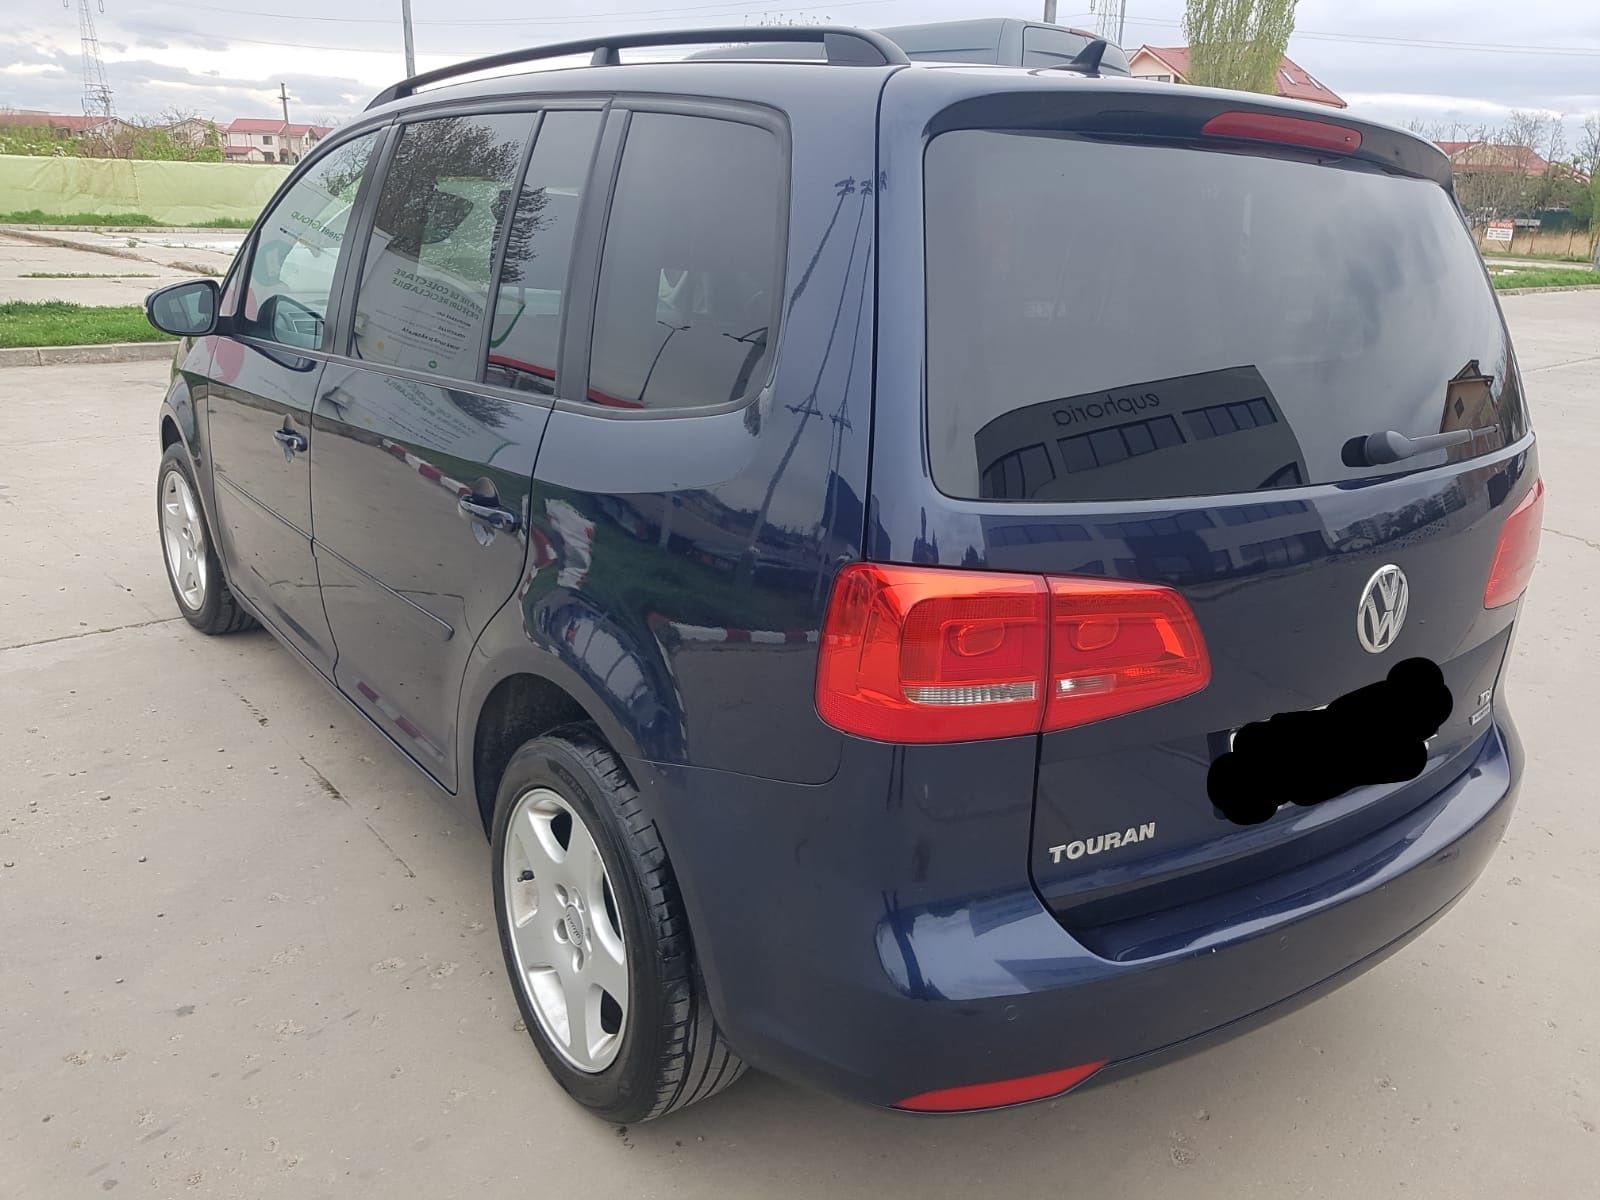 Volkswagen TOURAN 1.6 TDI 105 cp, Posibilitate vânzare în  rate